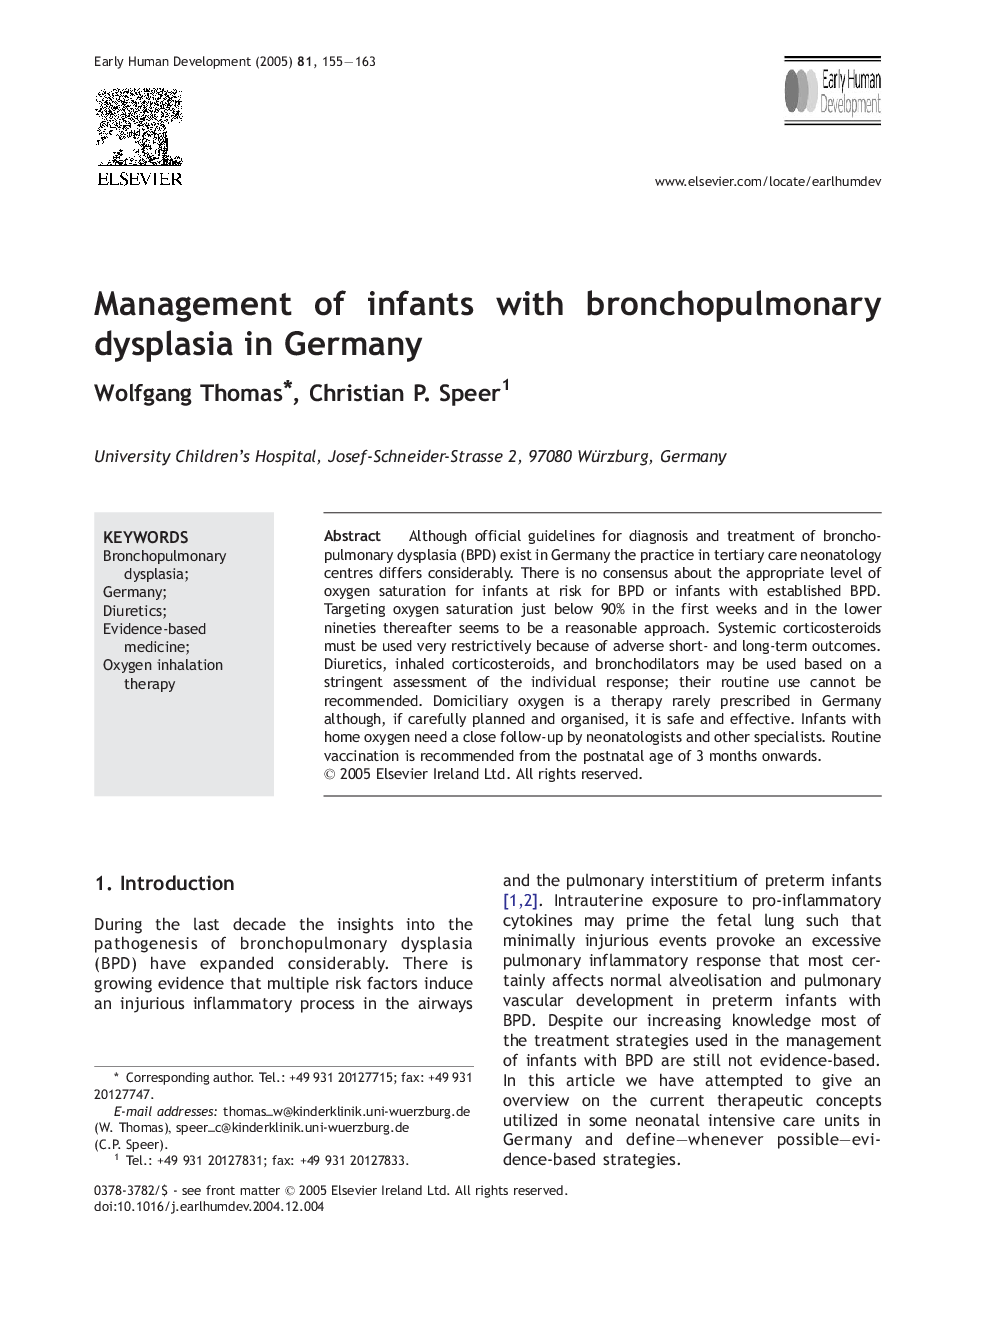 Management of infants with bronchopulmonary dysplasia in Germany